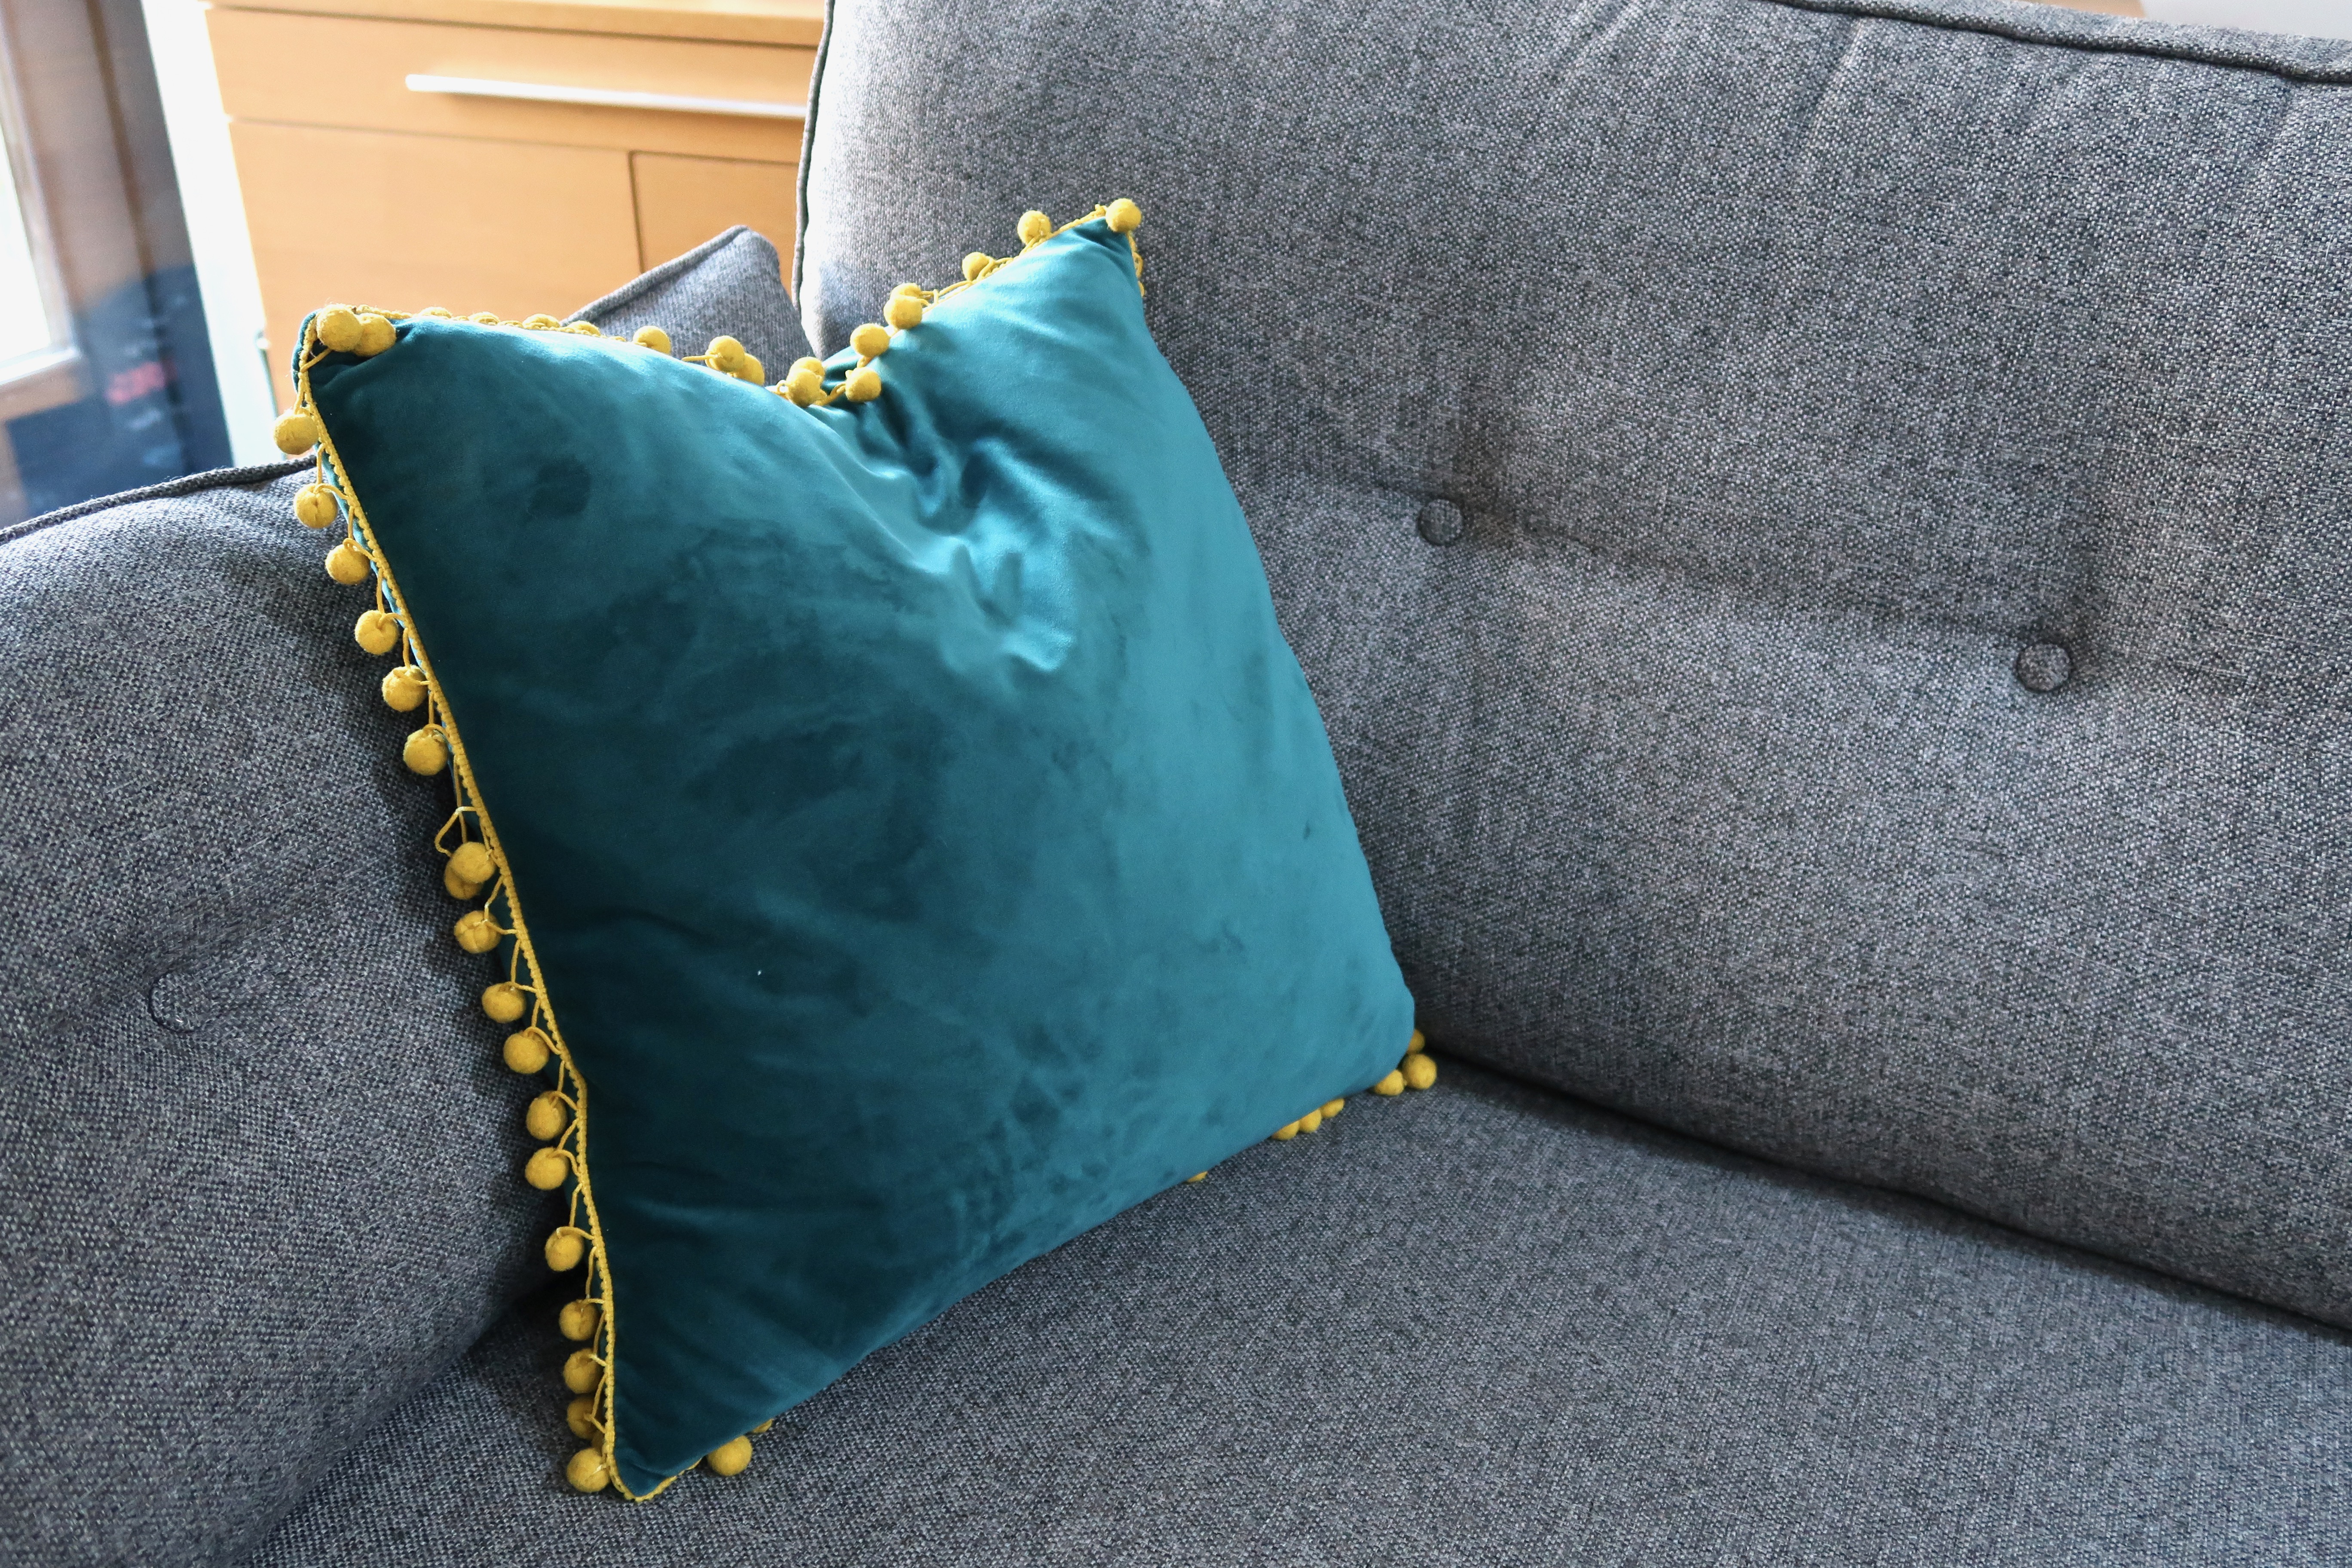 French Connection Zinc sofa teal velvet cushion